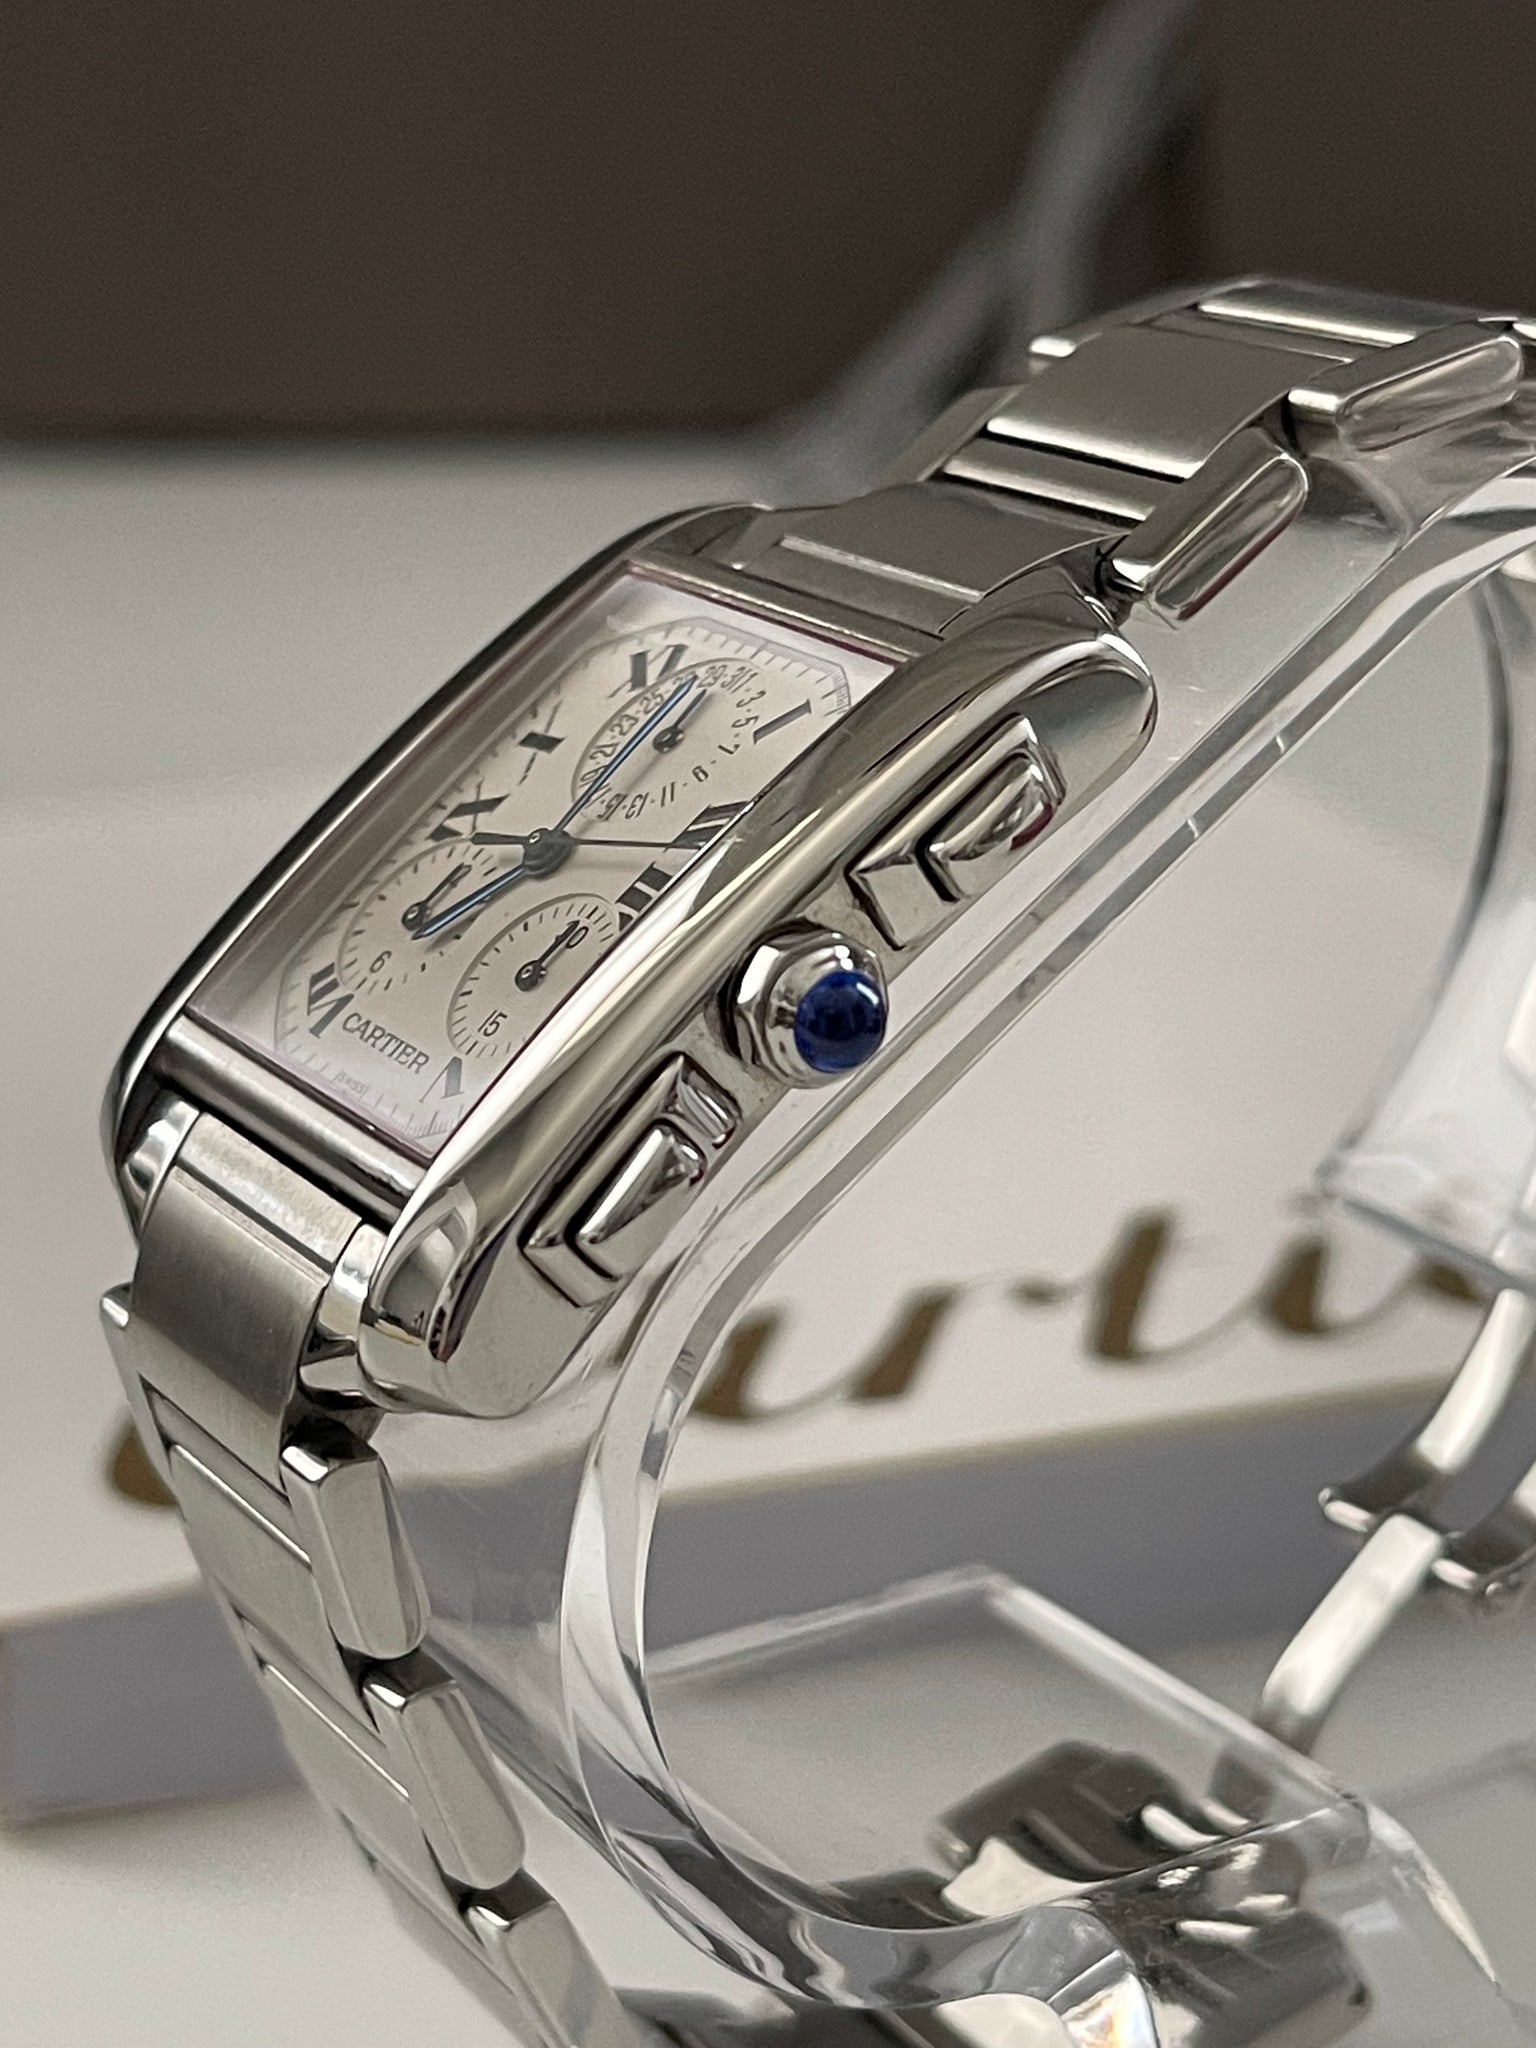 Cartier - Tank Francaise Chronoreflex Stainless Steel Bracelet Quartz –  Every Watch Has a Story